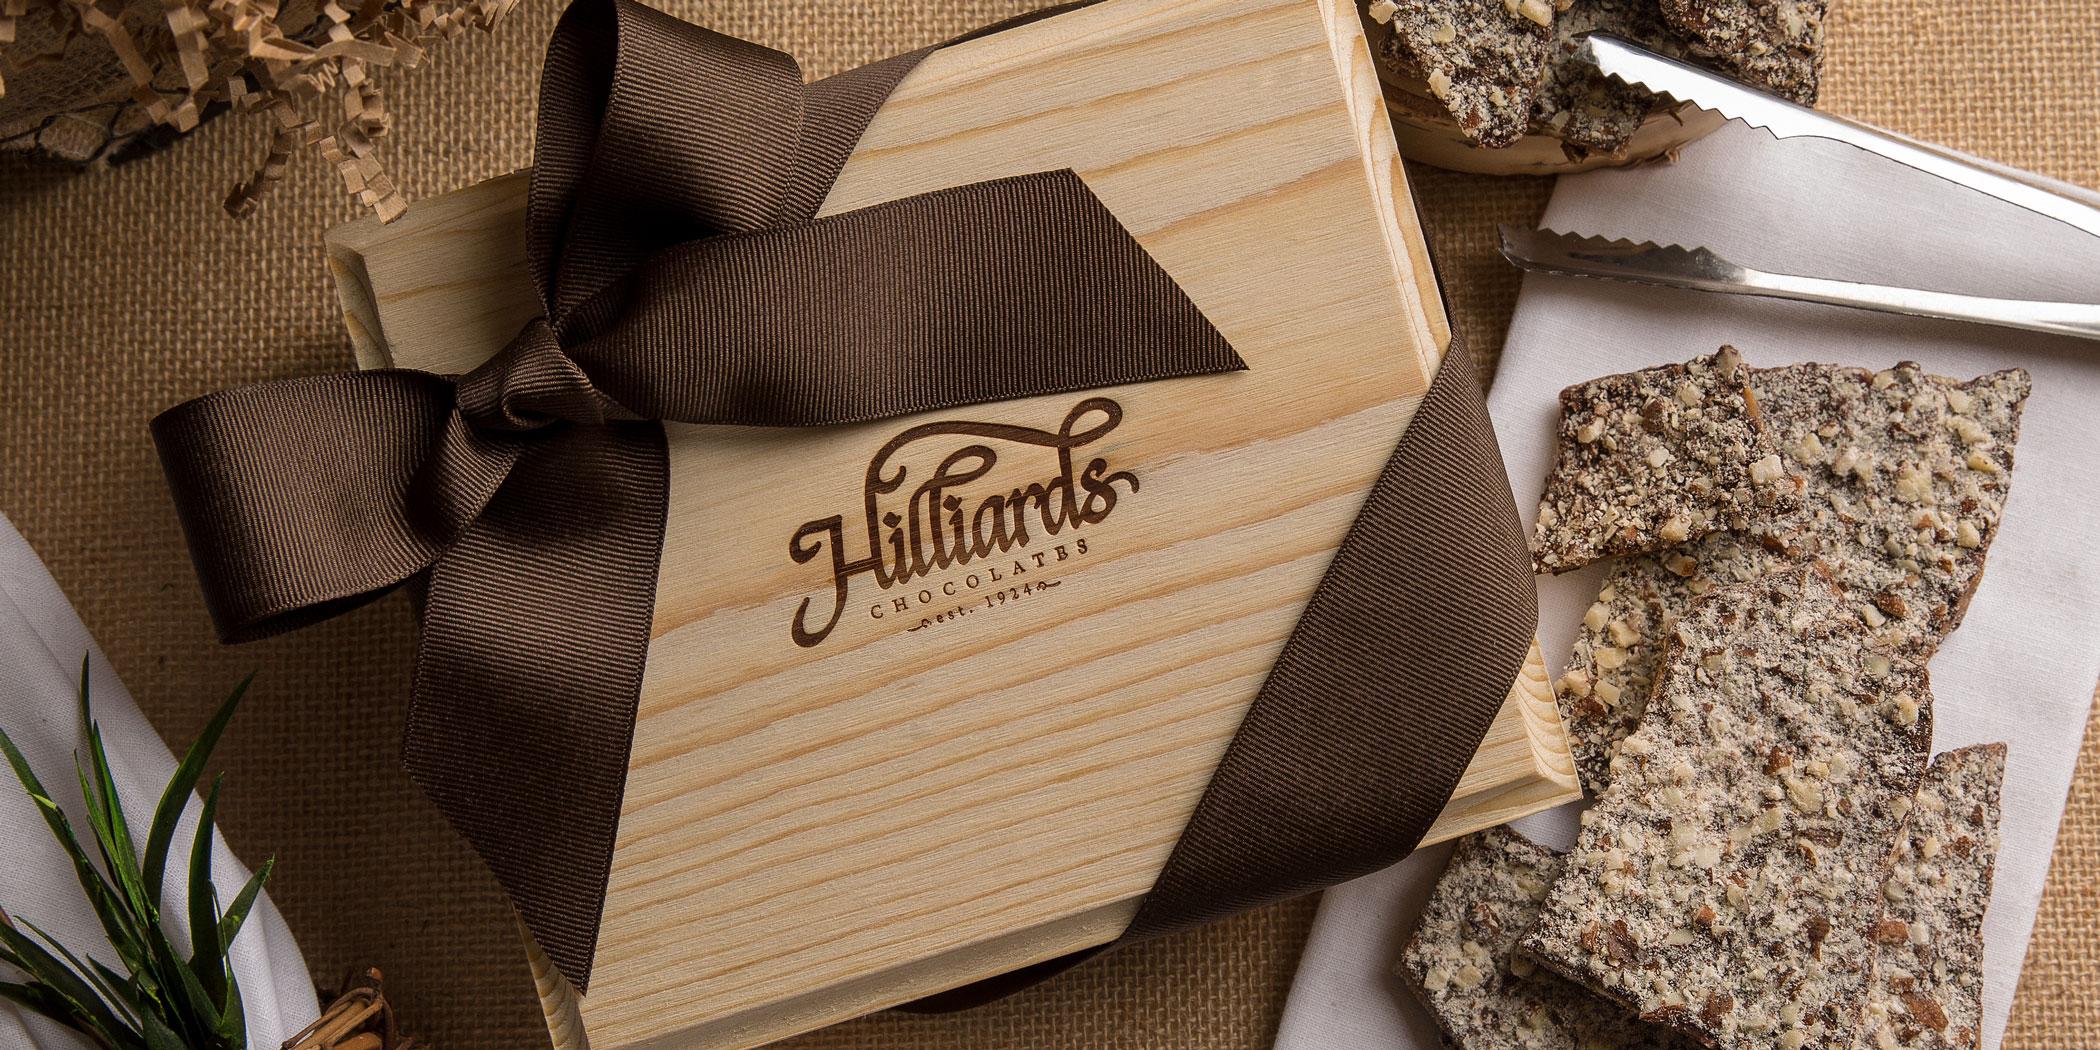 Hilliard’s Chocolates